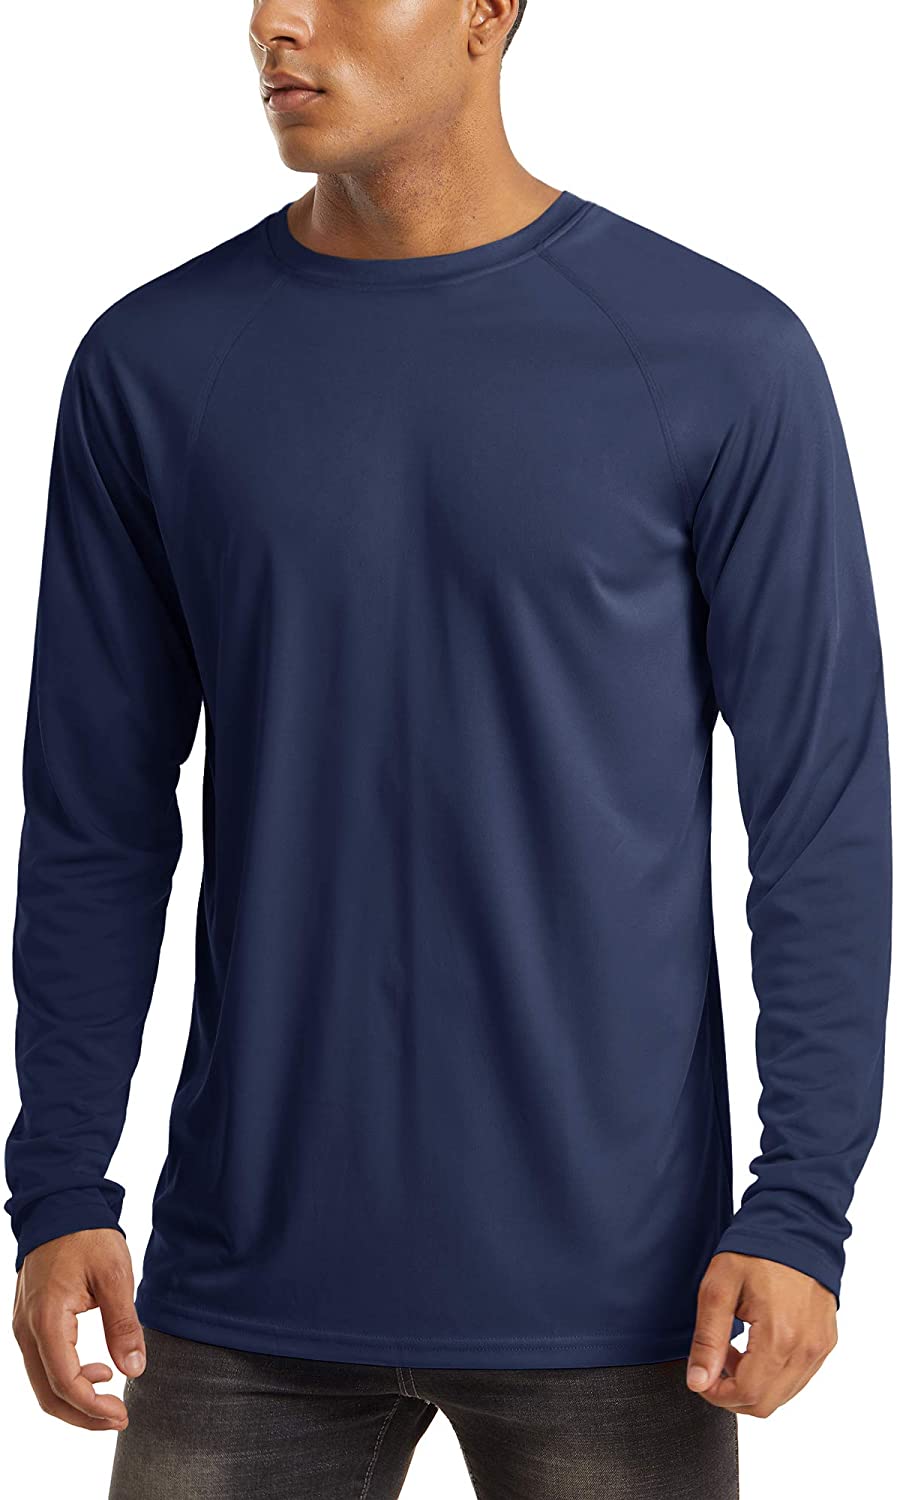  Contour Athletics UV Long Sleeve Shirt for Men, UPF 50